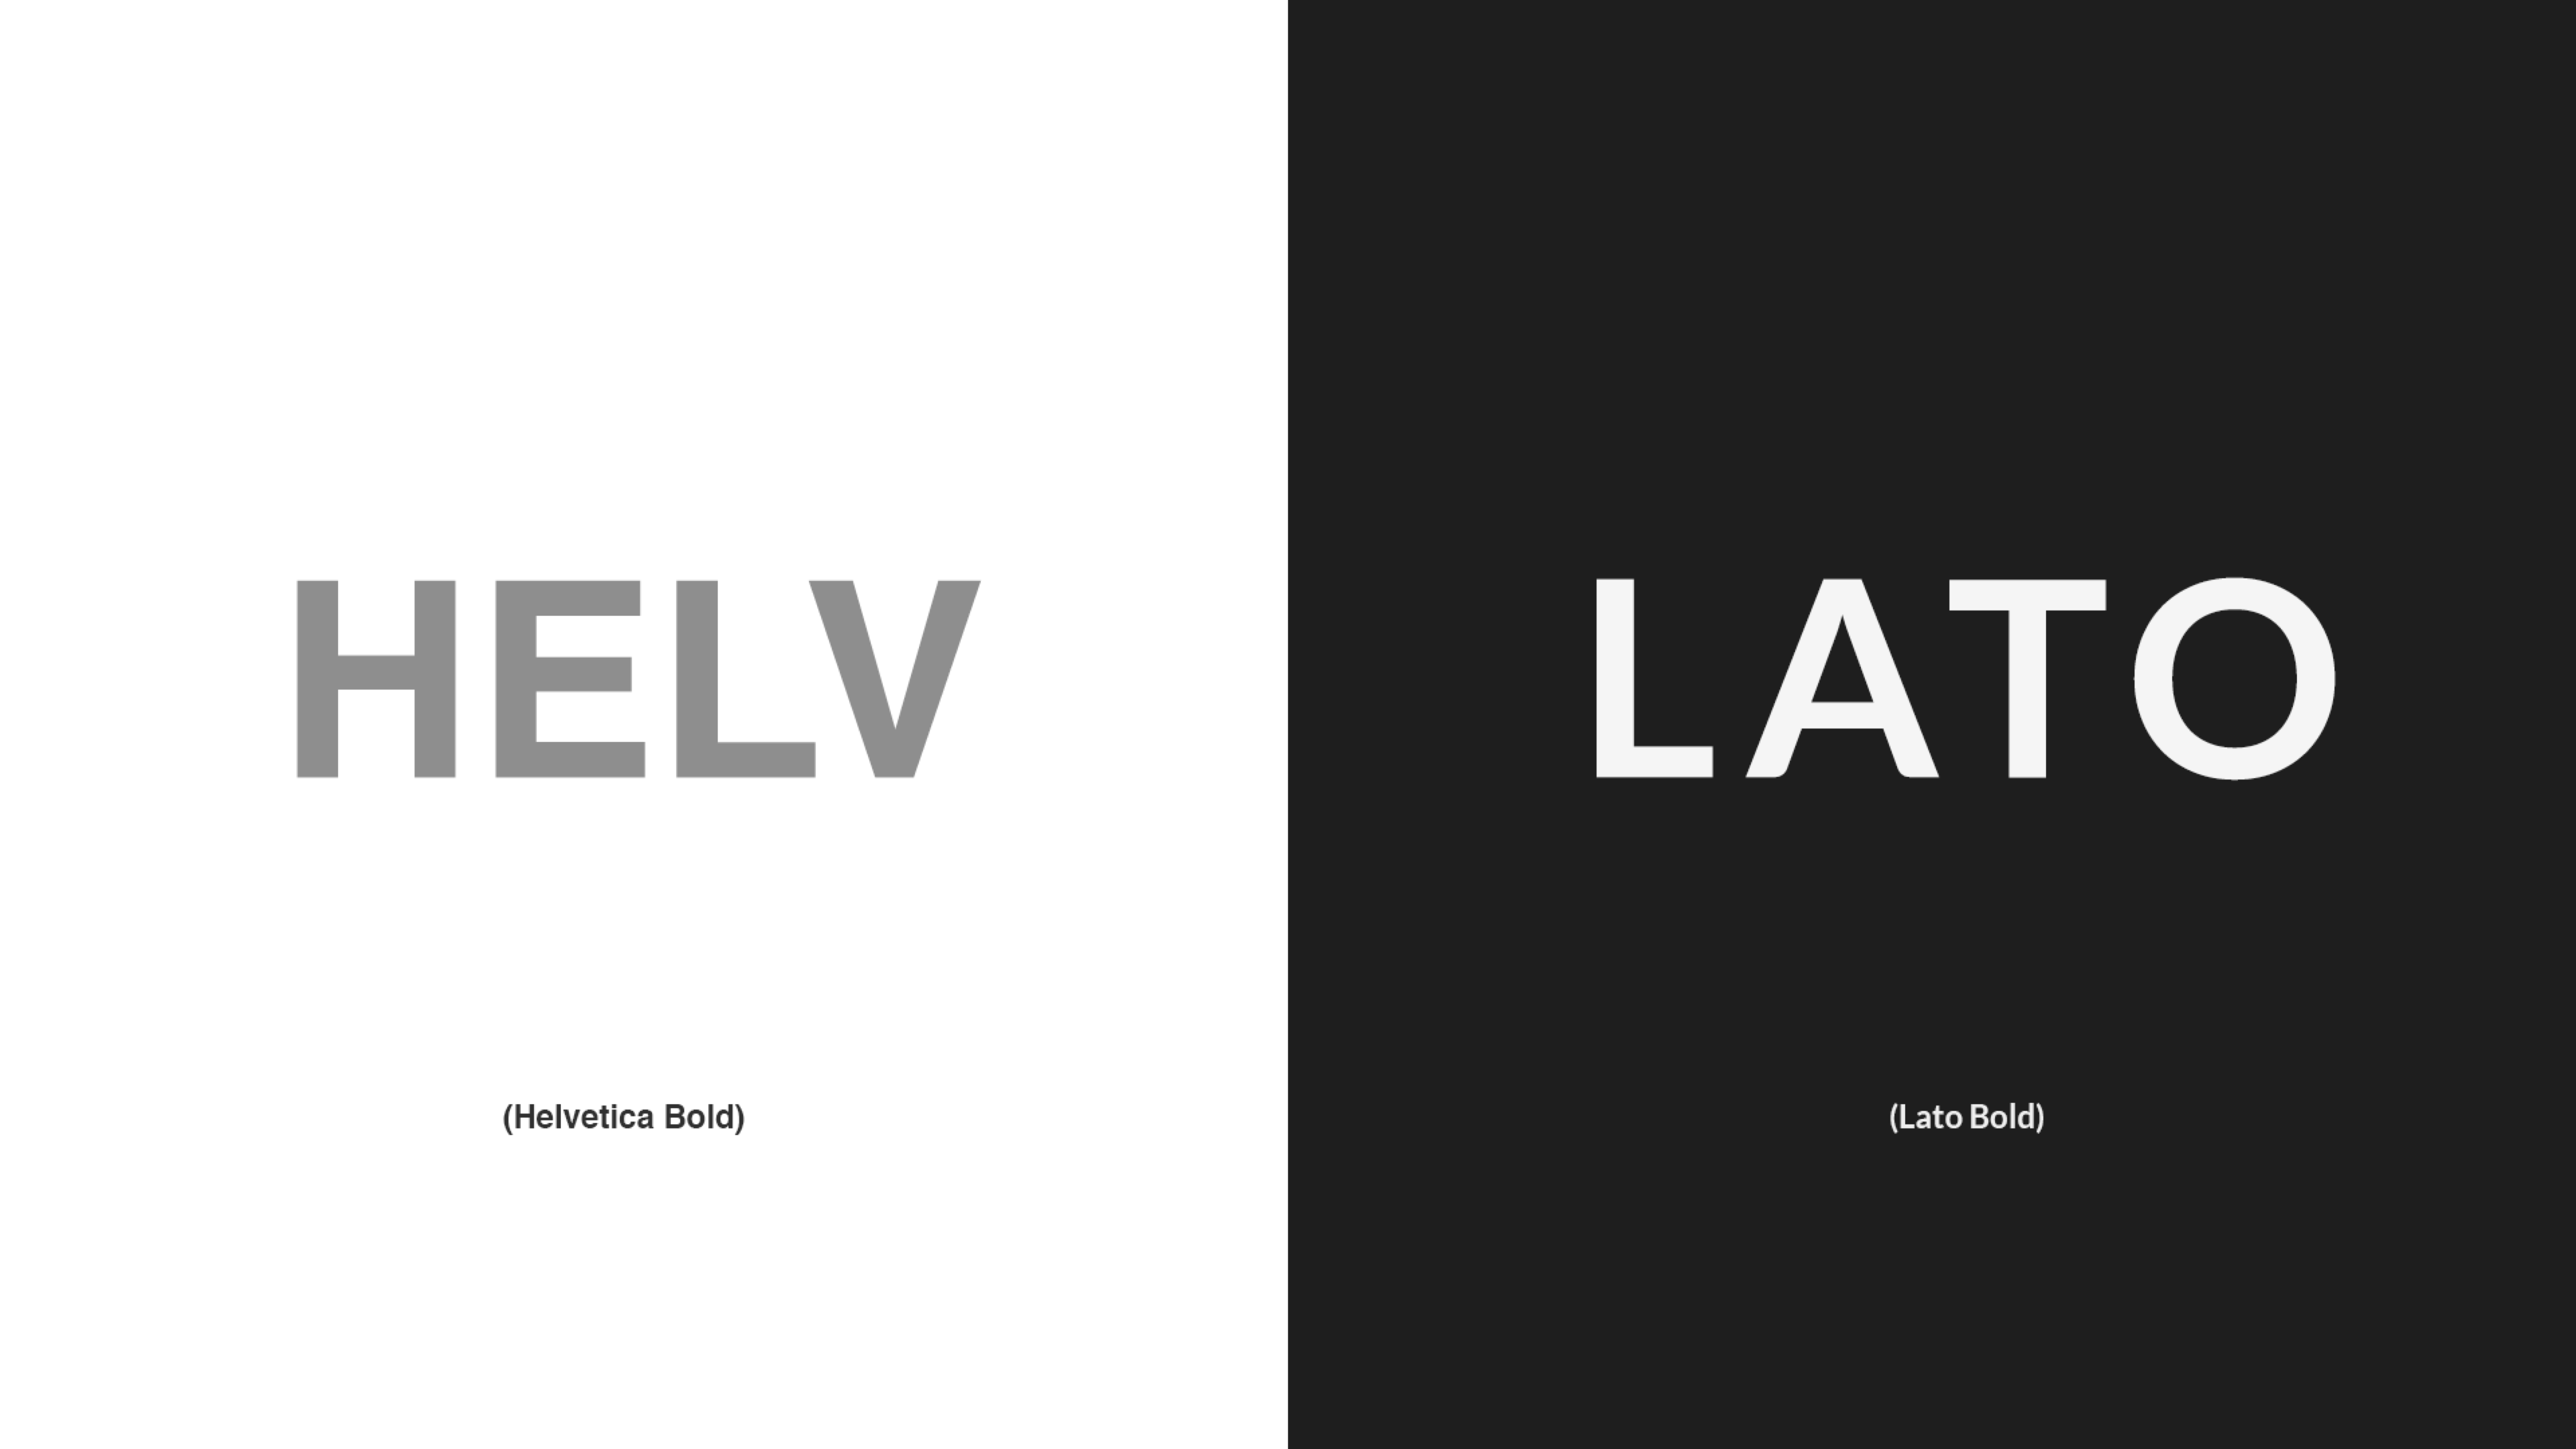 Helvetica font vs Lato font